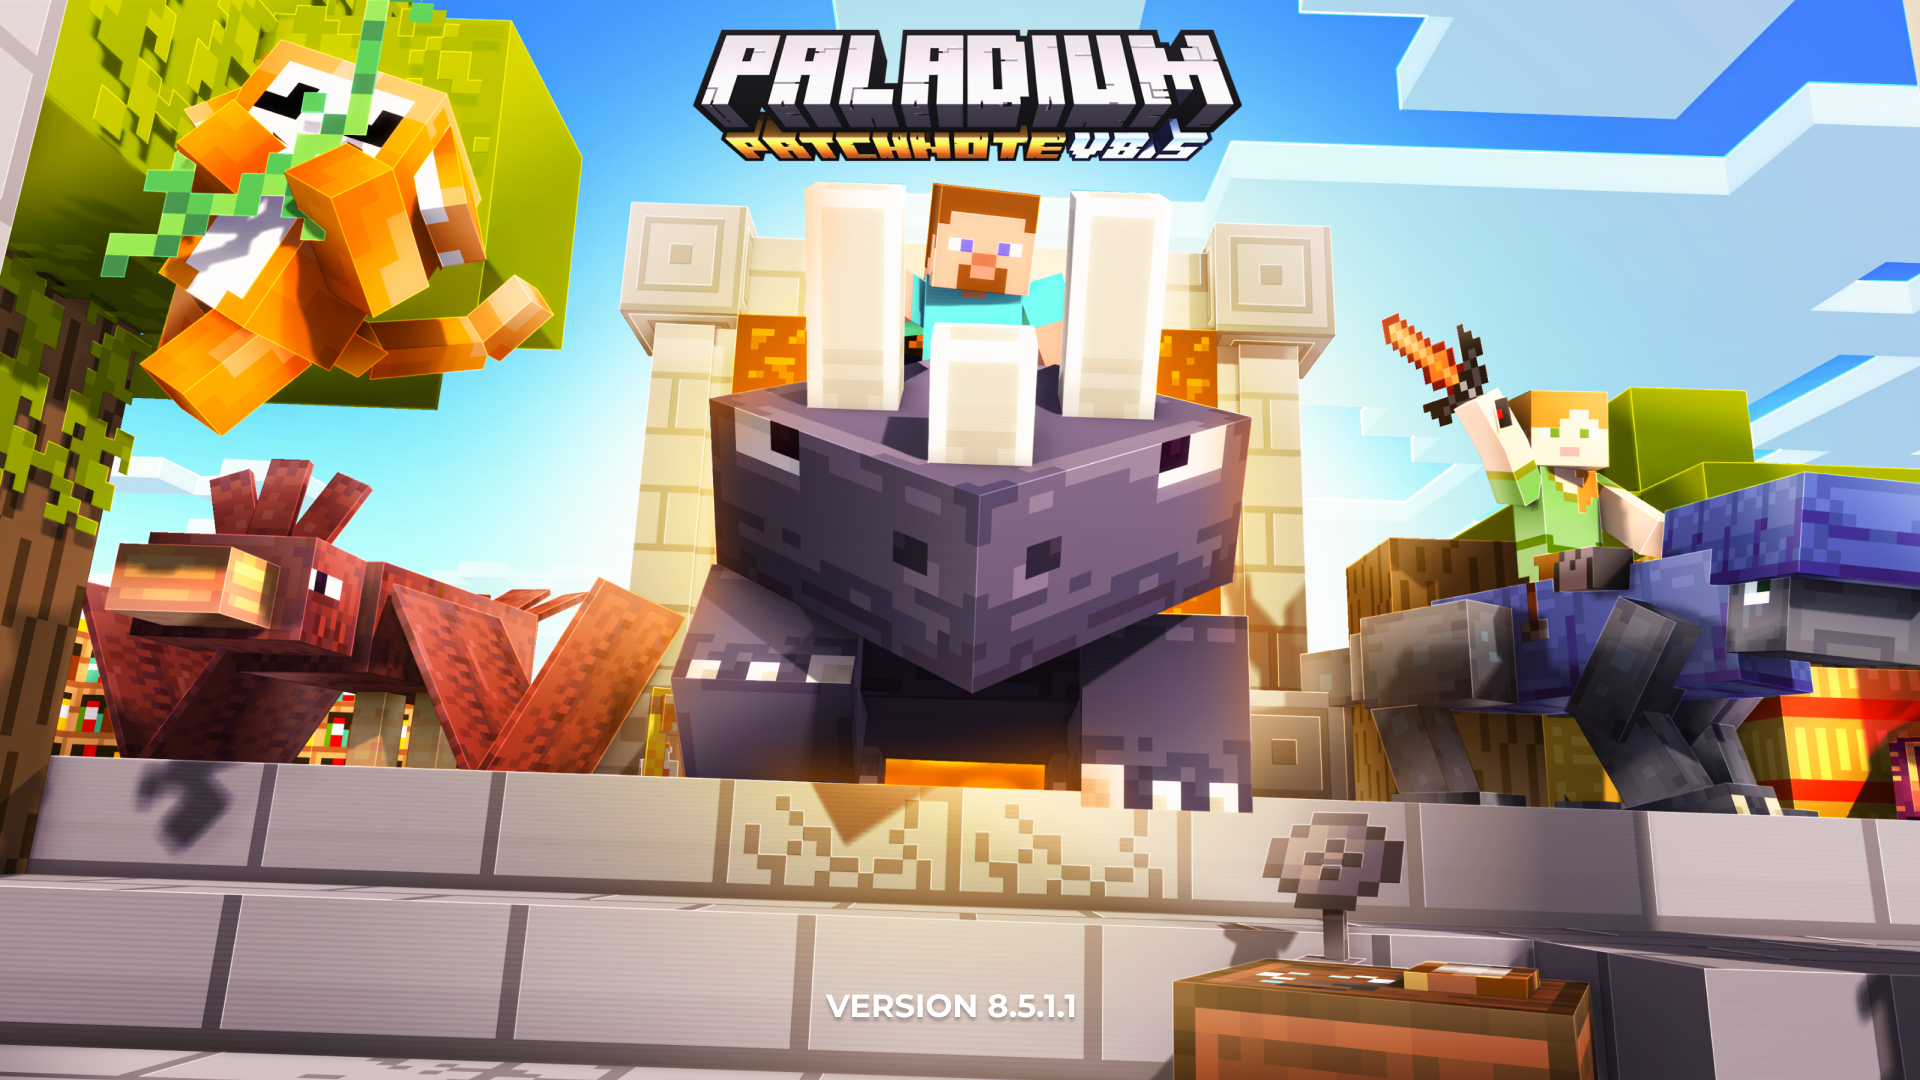 Paladium - PatchNote V8.5.1.1 | 05/02/2022